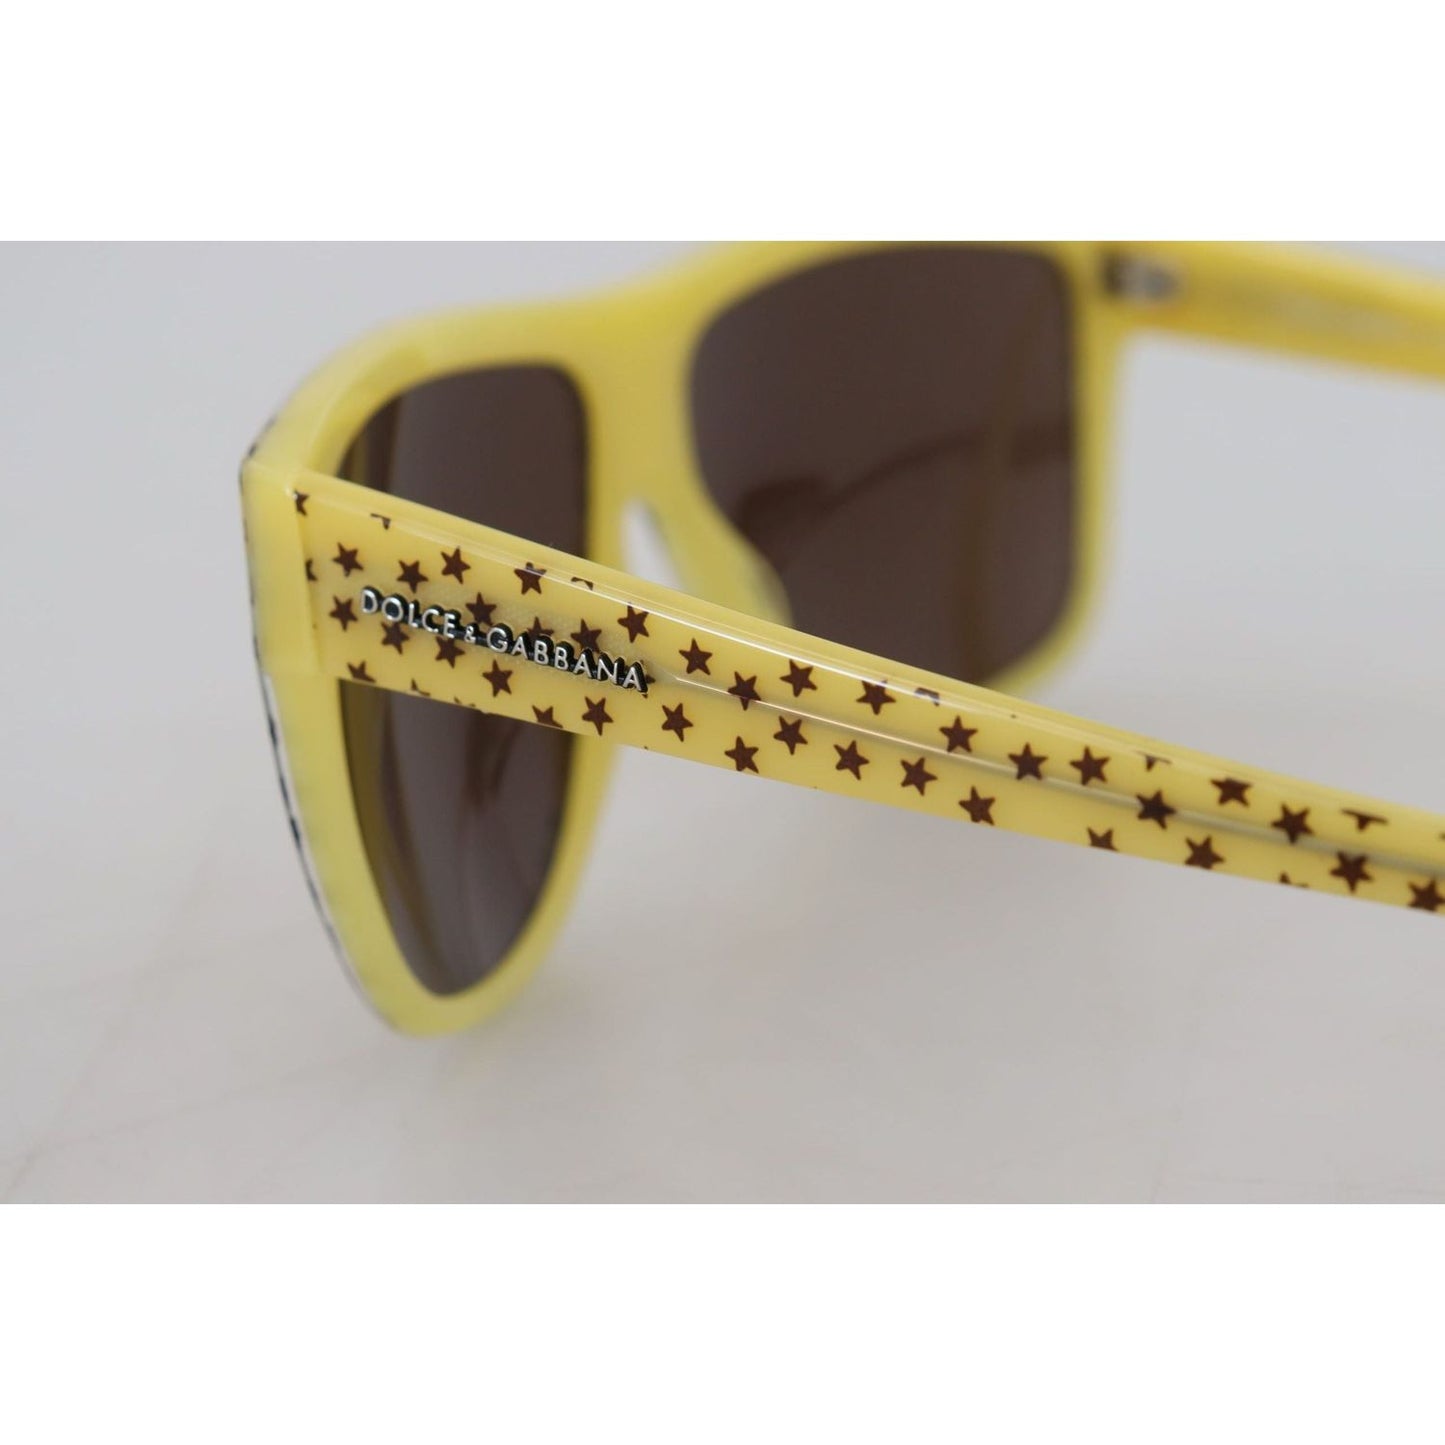 Dolce & Gabbana Stellar Chic Square Sunglasses in Yellow yellow-stars-acetate-square-shades-dg4125-sunglasses IMG_5272-scaled-d6b9e46f-afe.jpg